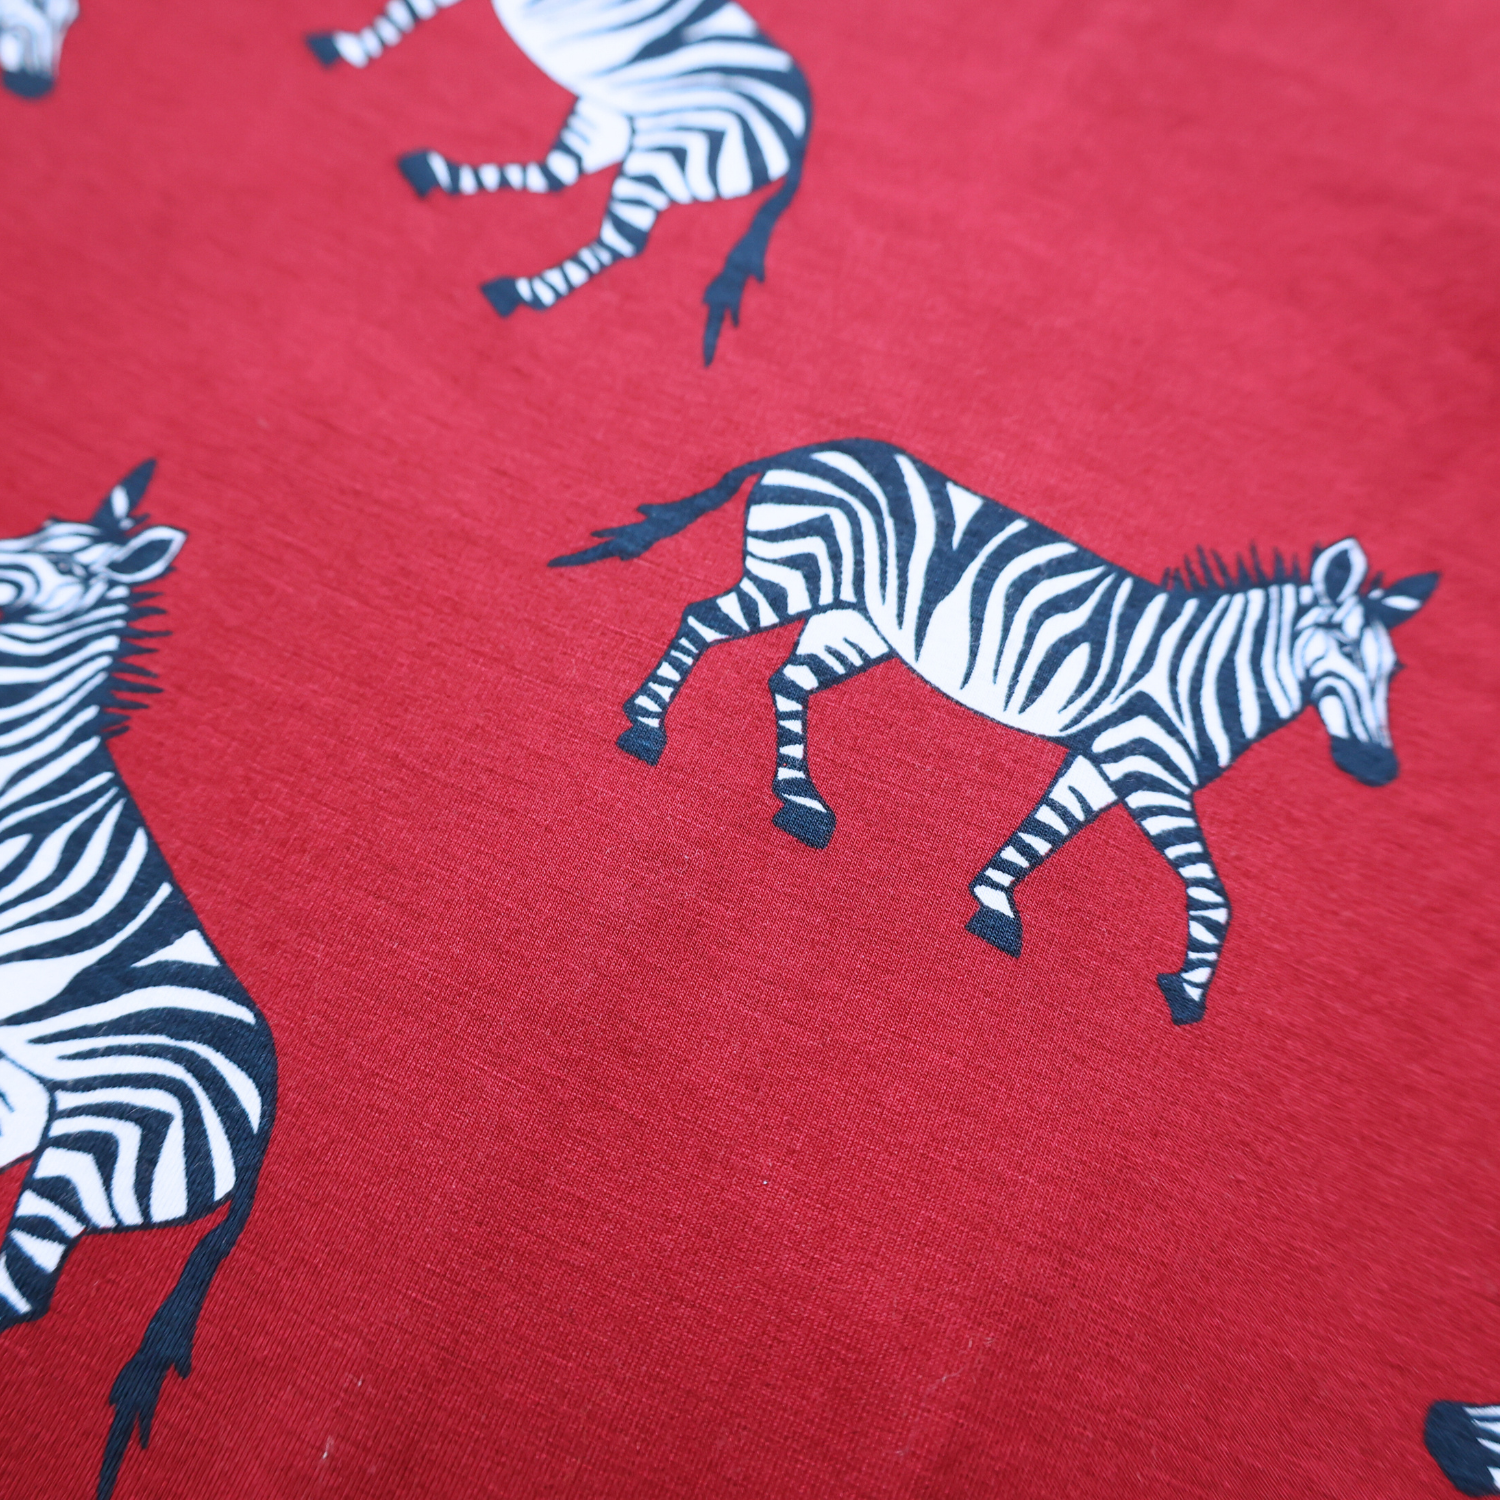 Conjunto de pijama para niño Zebra burdeos